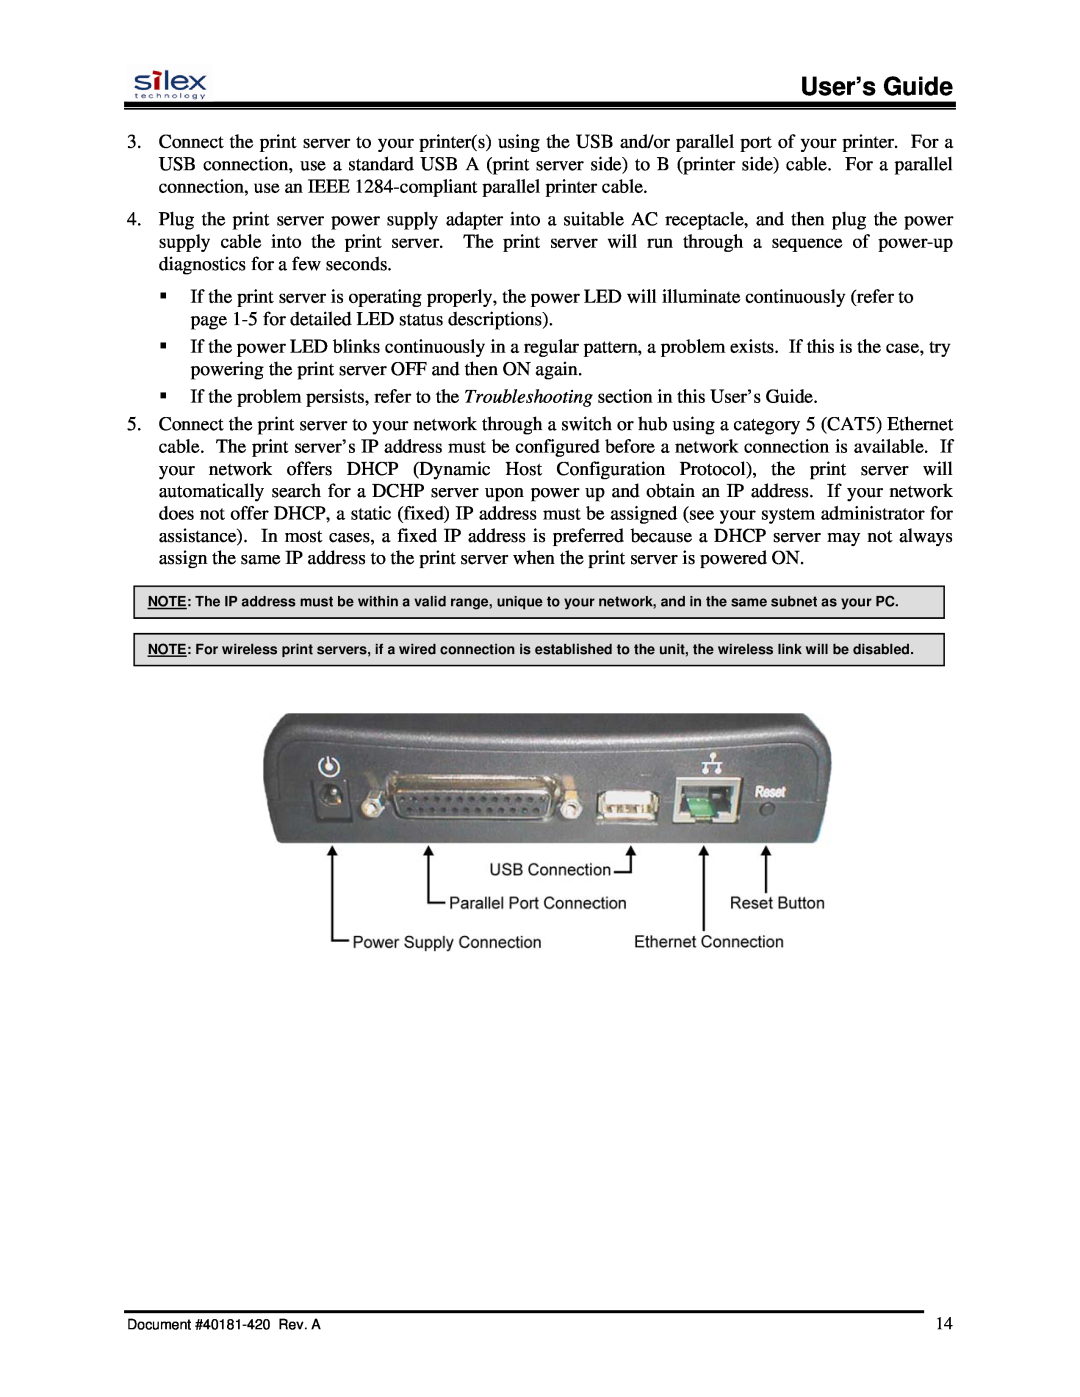 Silex technology SX-200 user manual User’s Guide 